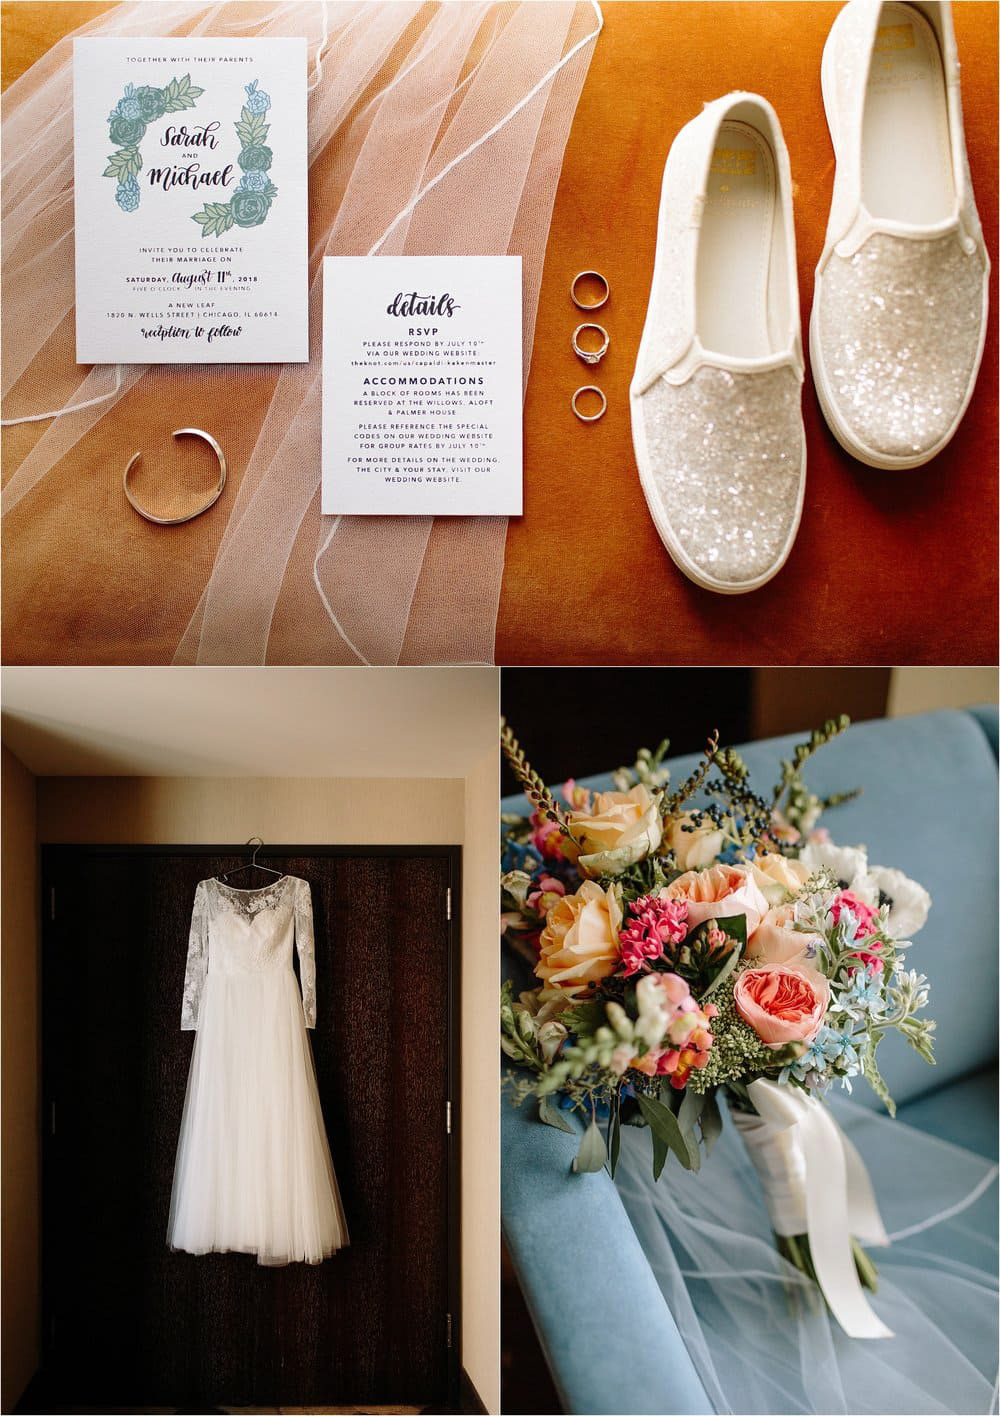 Image may contain: vase, wedding dress and wedding